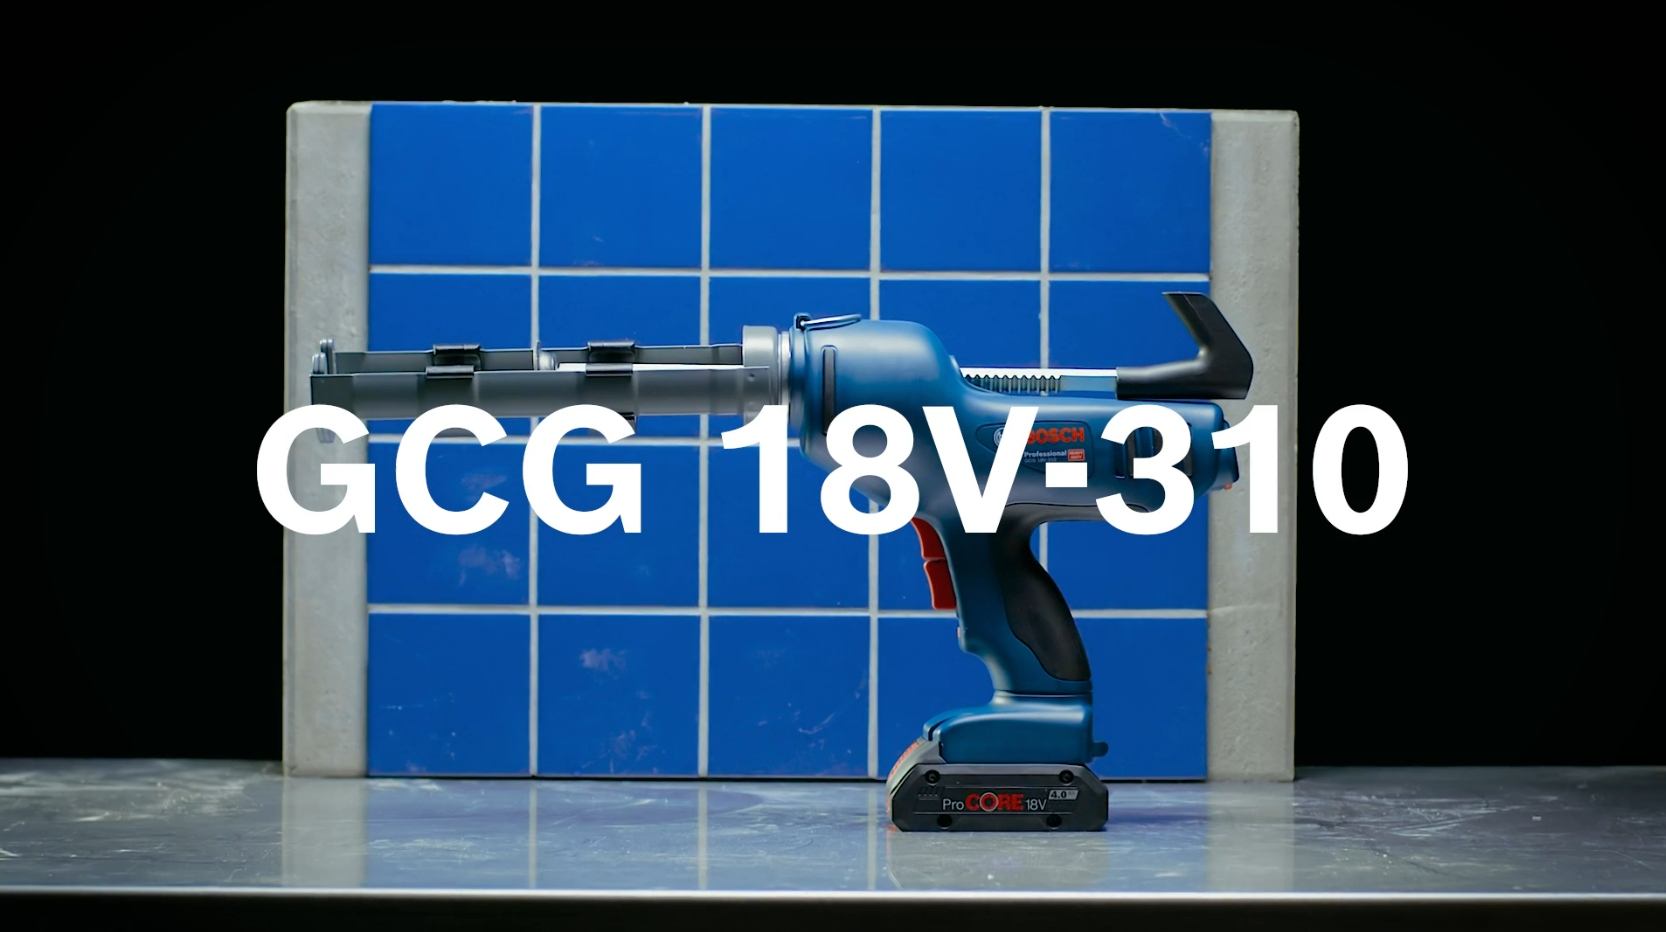 18V-310 Passiontec GCG bei Bosch kaufen Professional